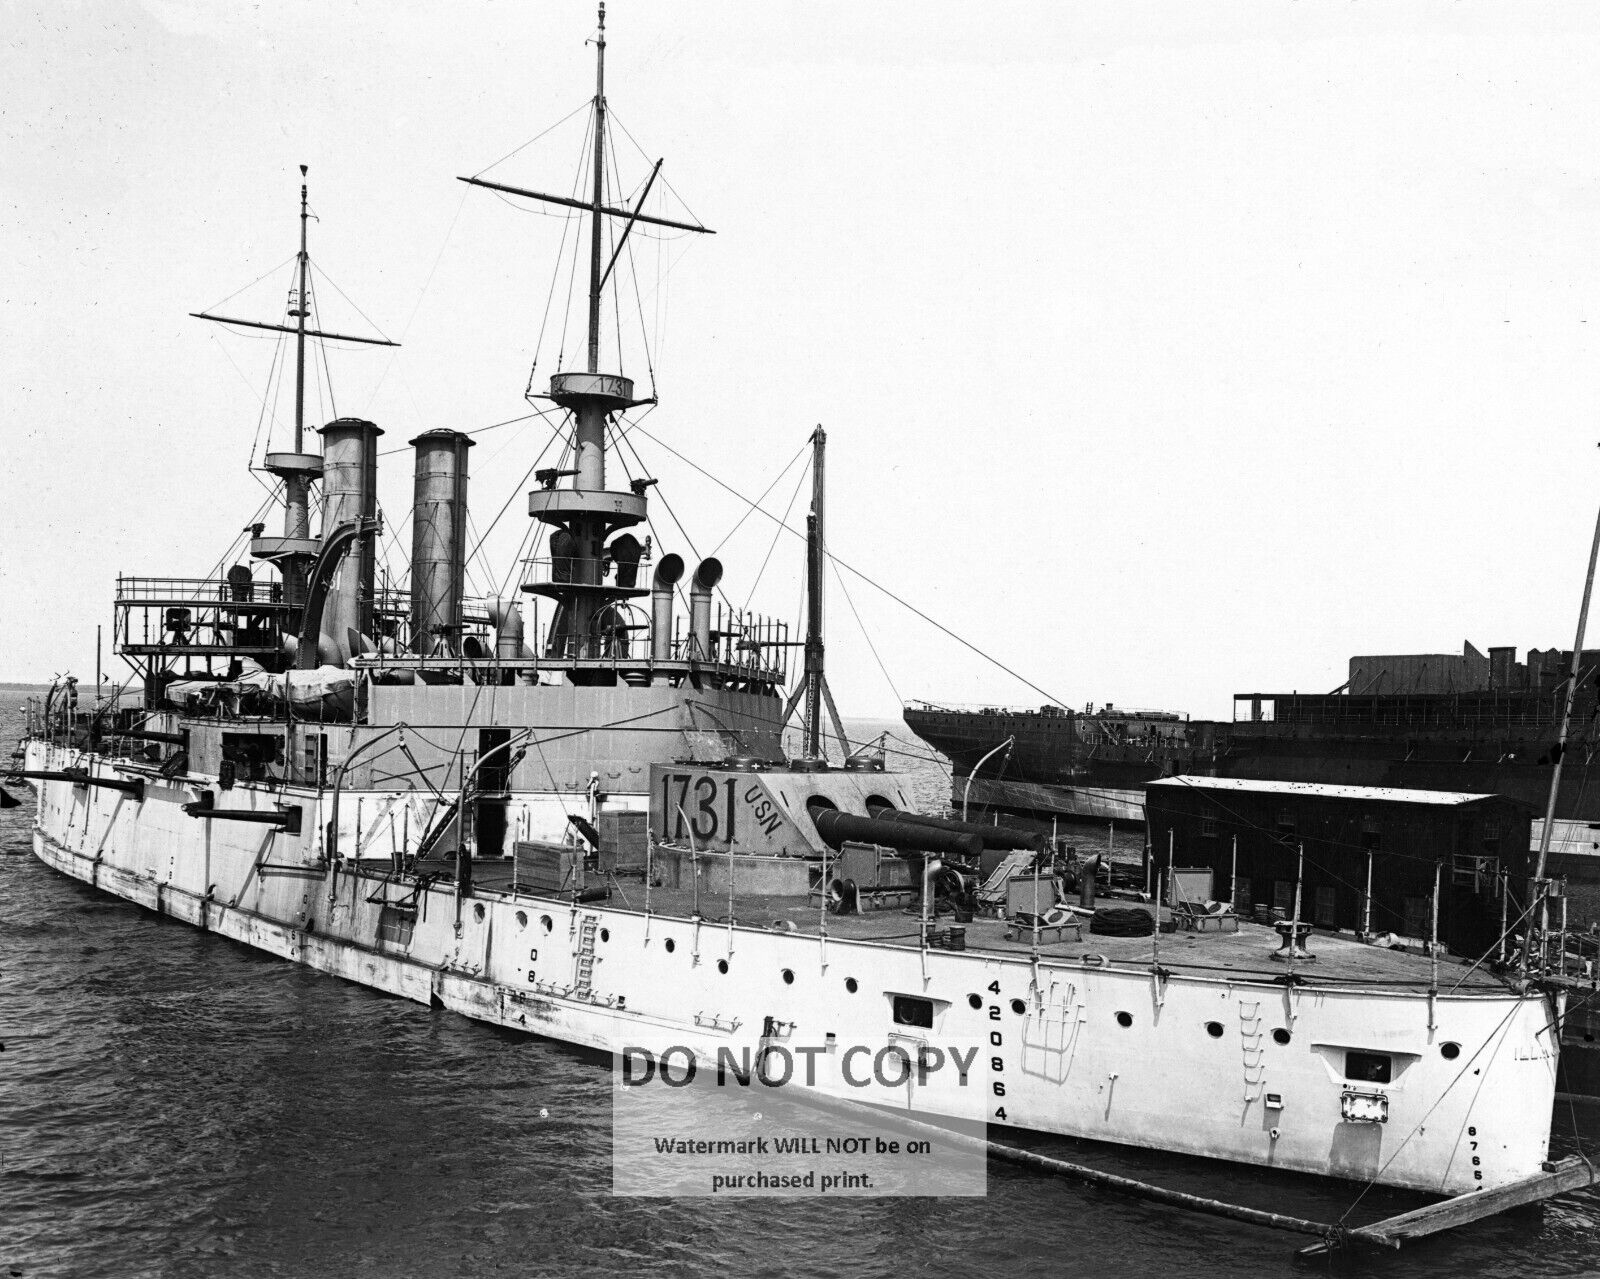 USS ILLINOIS (BB-7) BATTLESHIP, CIRCA 1901 - 8X10 PHOTO (OP-979)